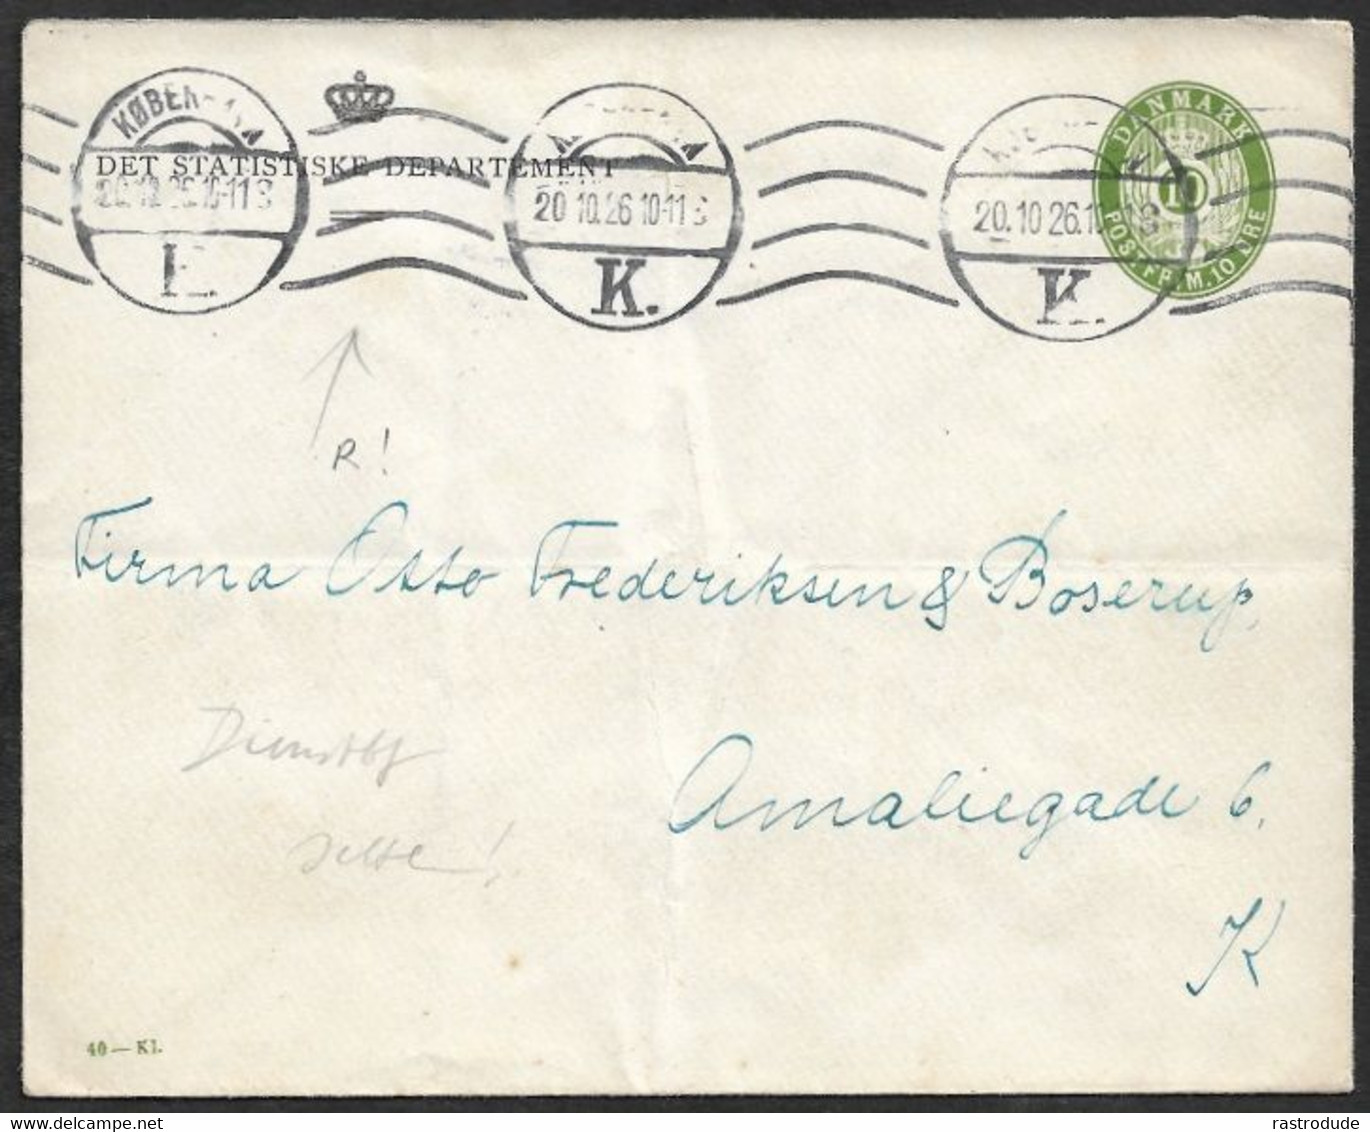 1926 DENMARK - OFFICIAL SERVICE DIENSTBRIEF POSTAL STATIONERY ENVELOPE 10 öre - USED - RARE - Enteros Postales